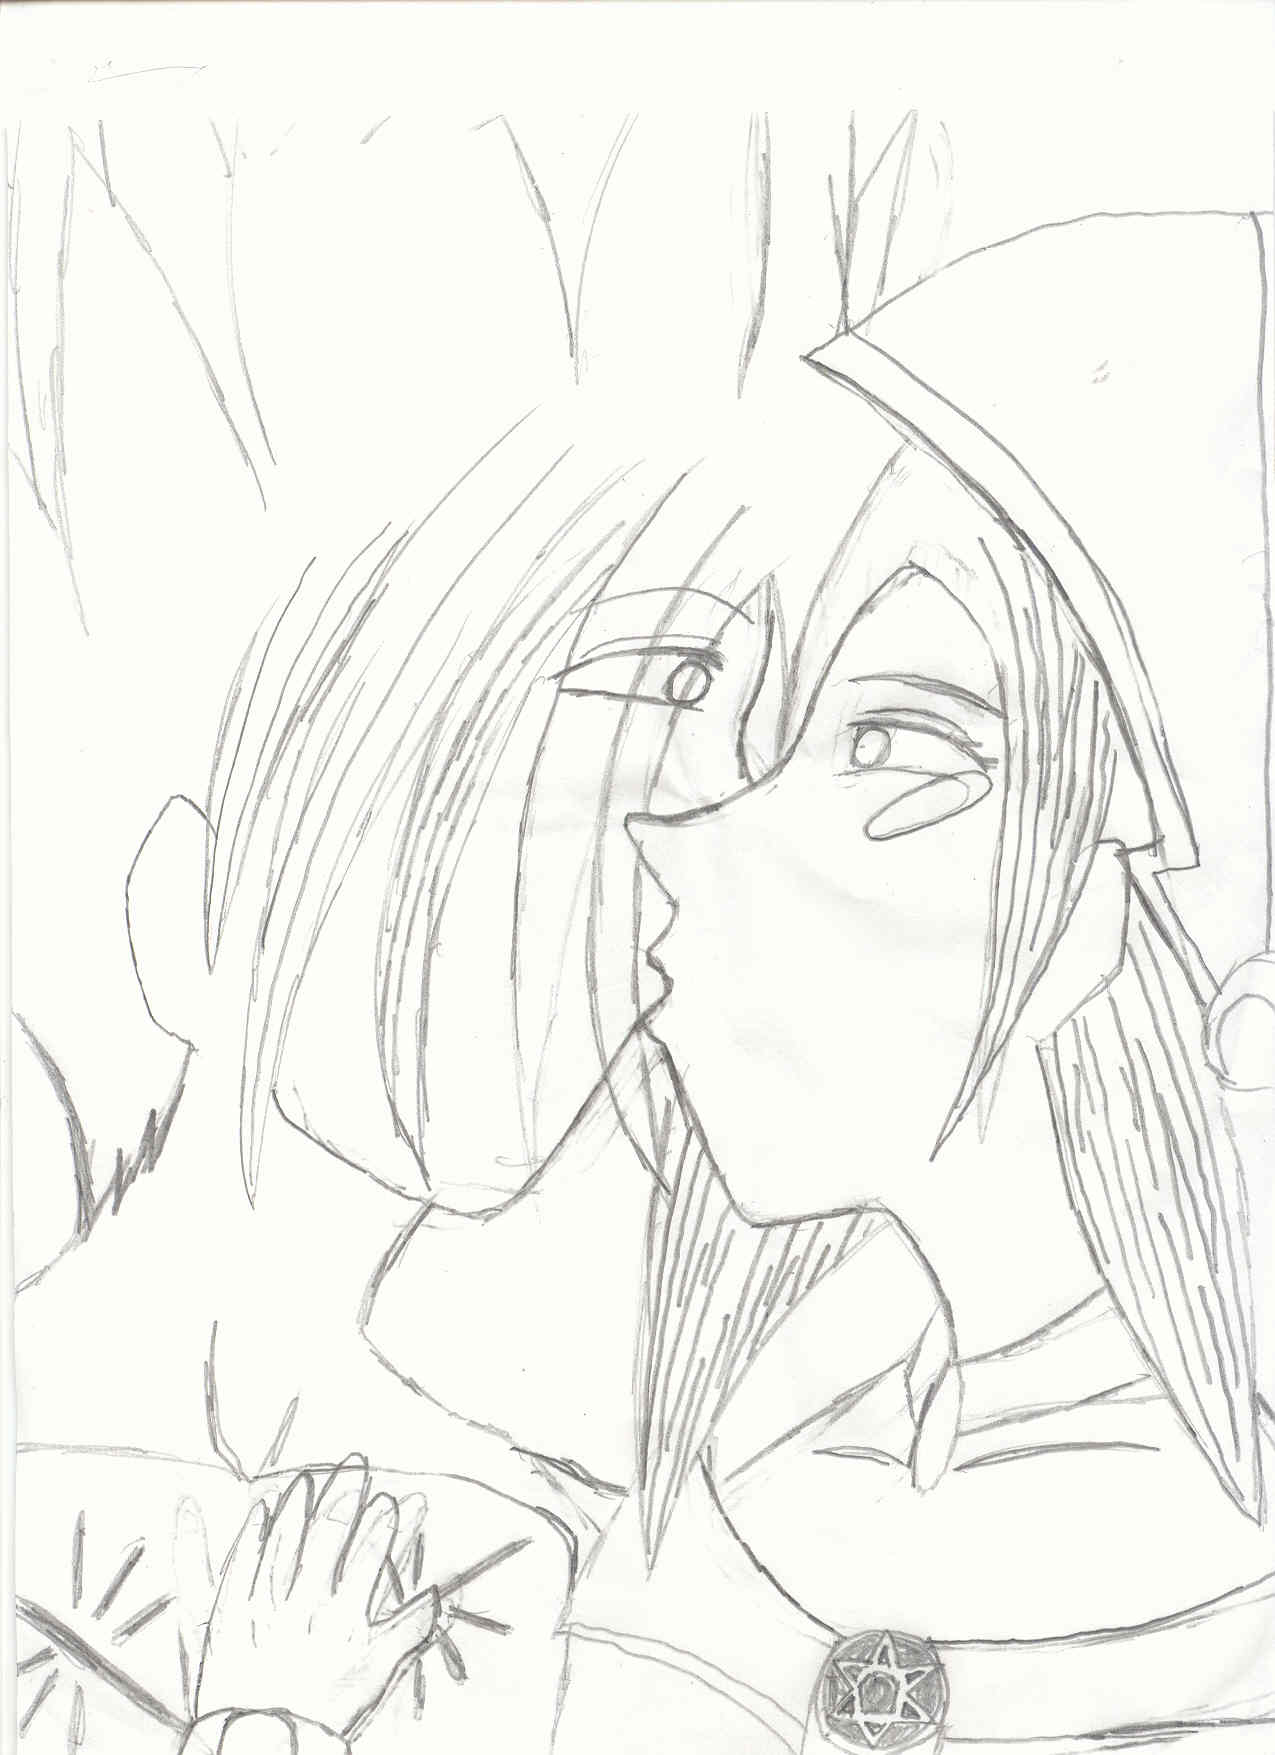 Ryu(my manga character) kissing Dark Magician Girl by MageKnight007